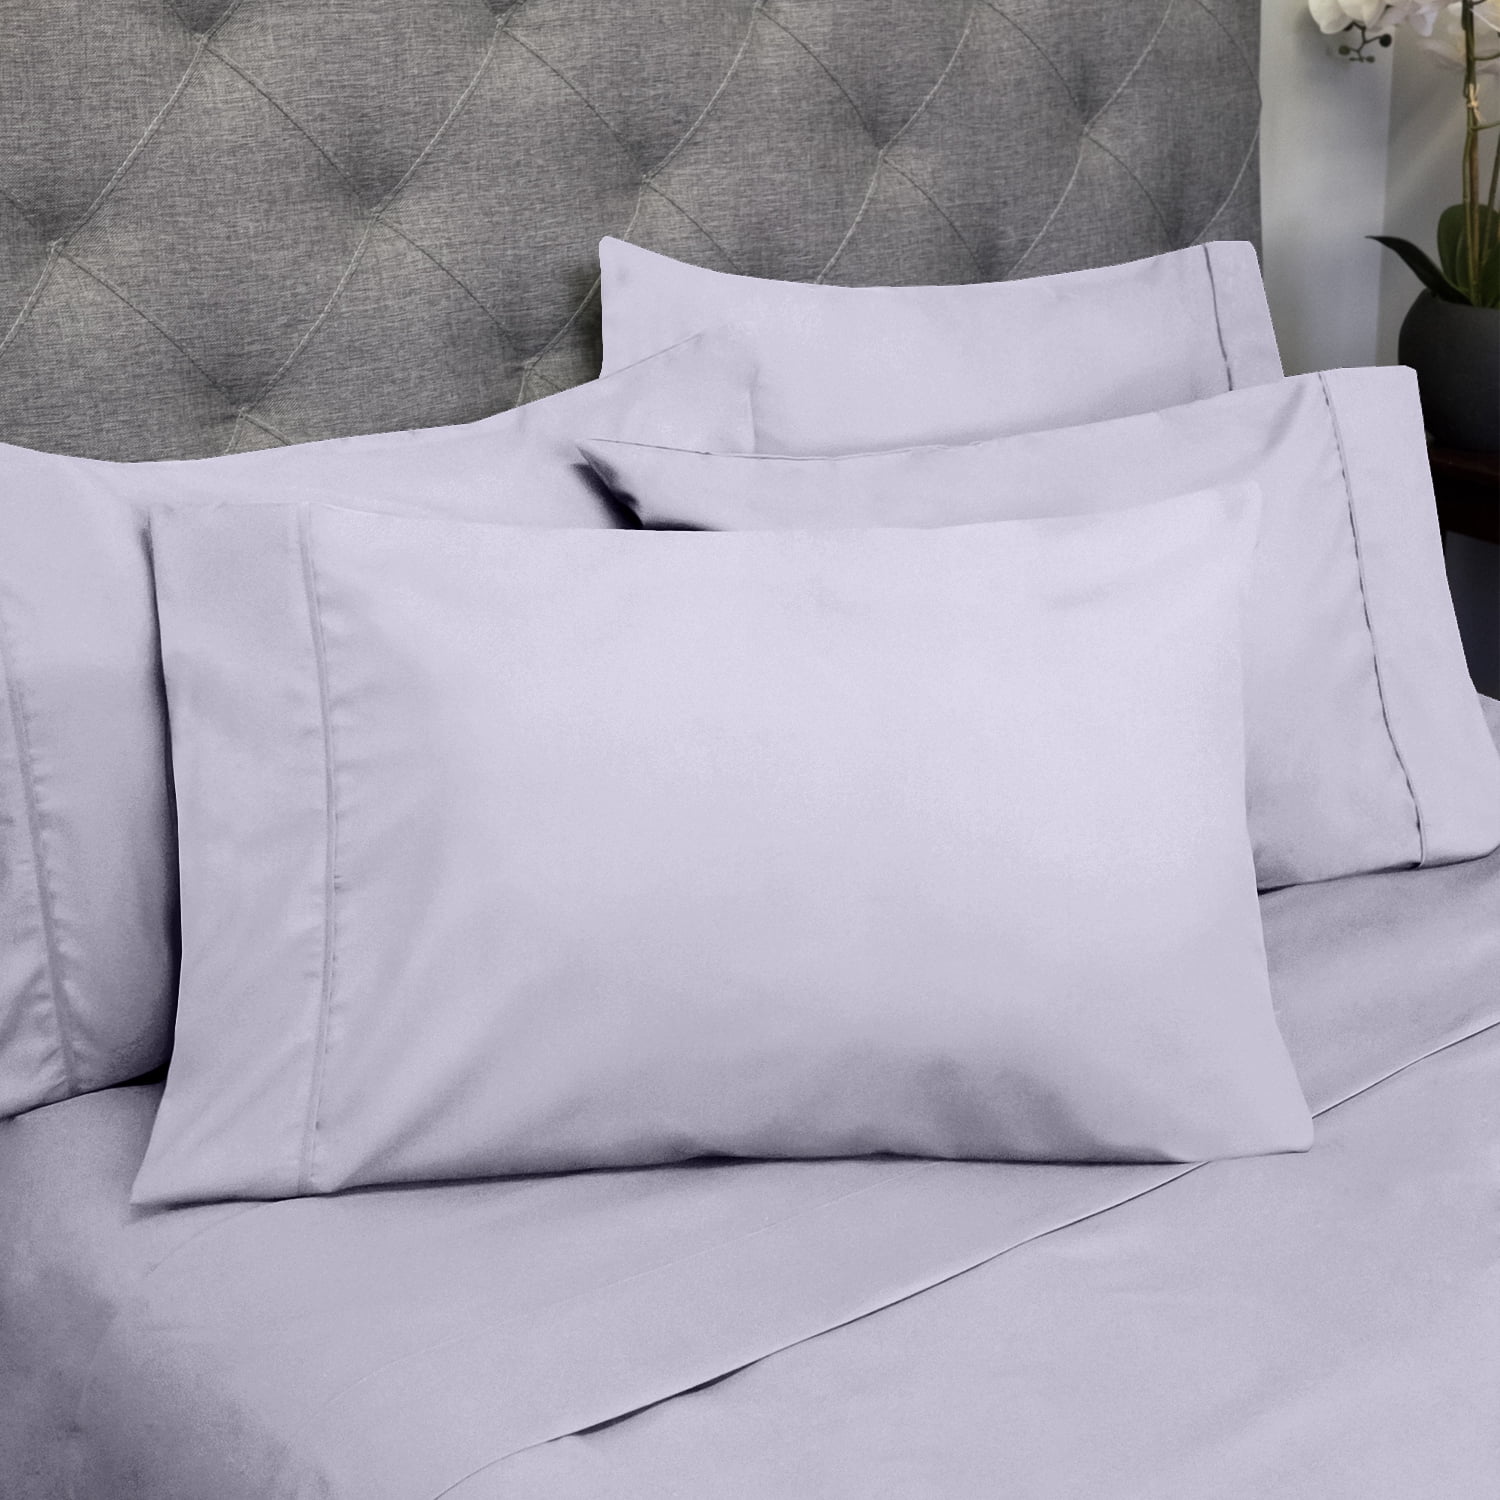 Details about   1000TC Single Premium Flat Bed Sheet Super Soft Egyptian Cotton Silver Color 